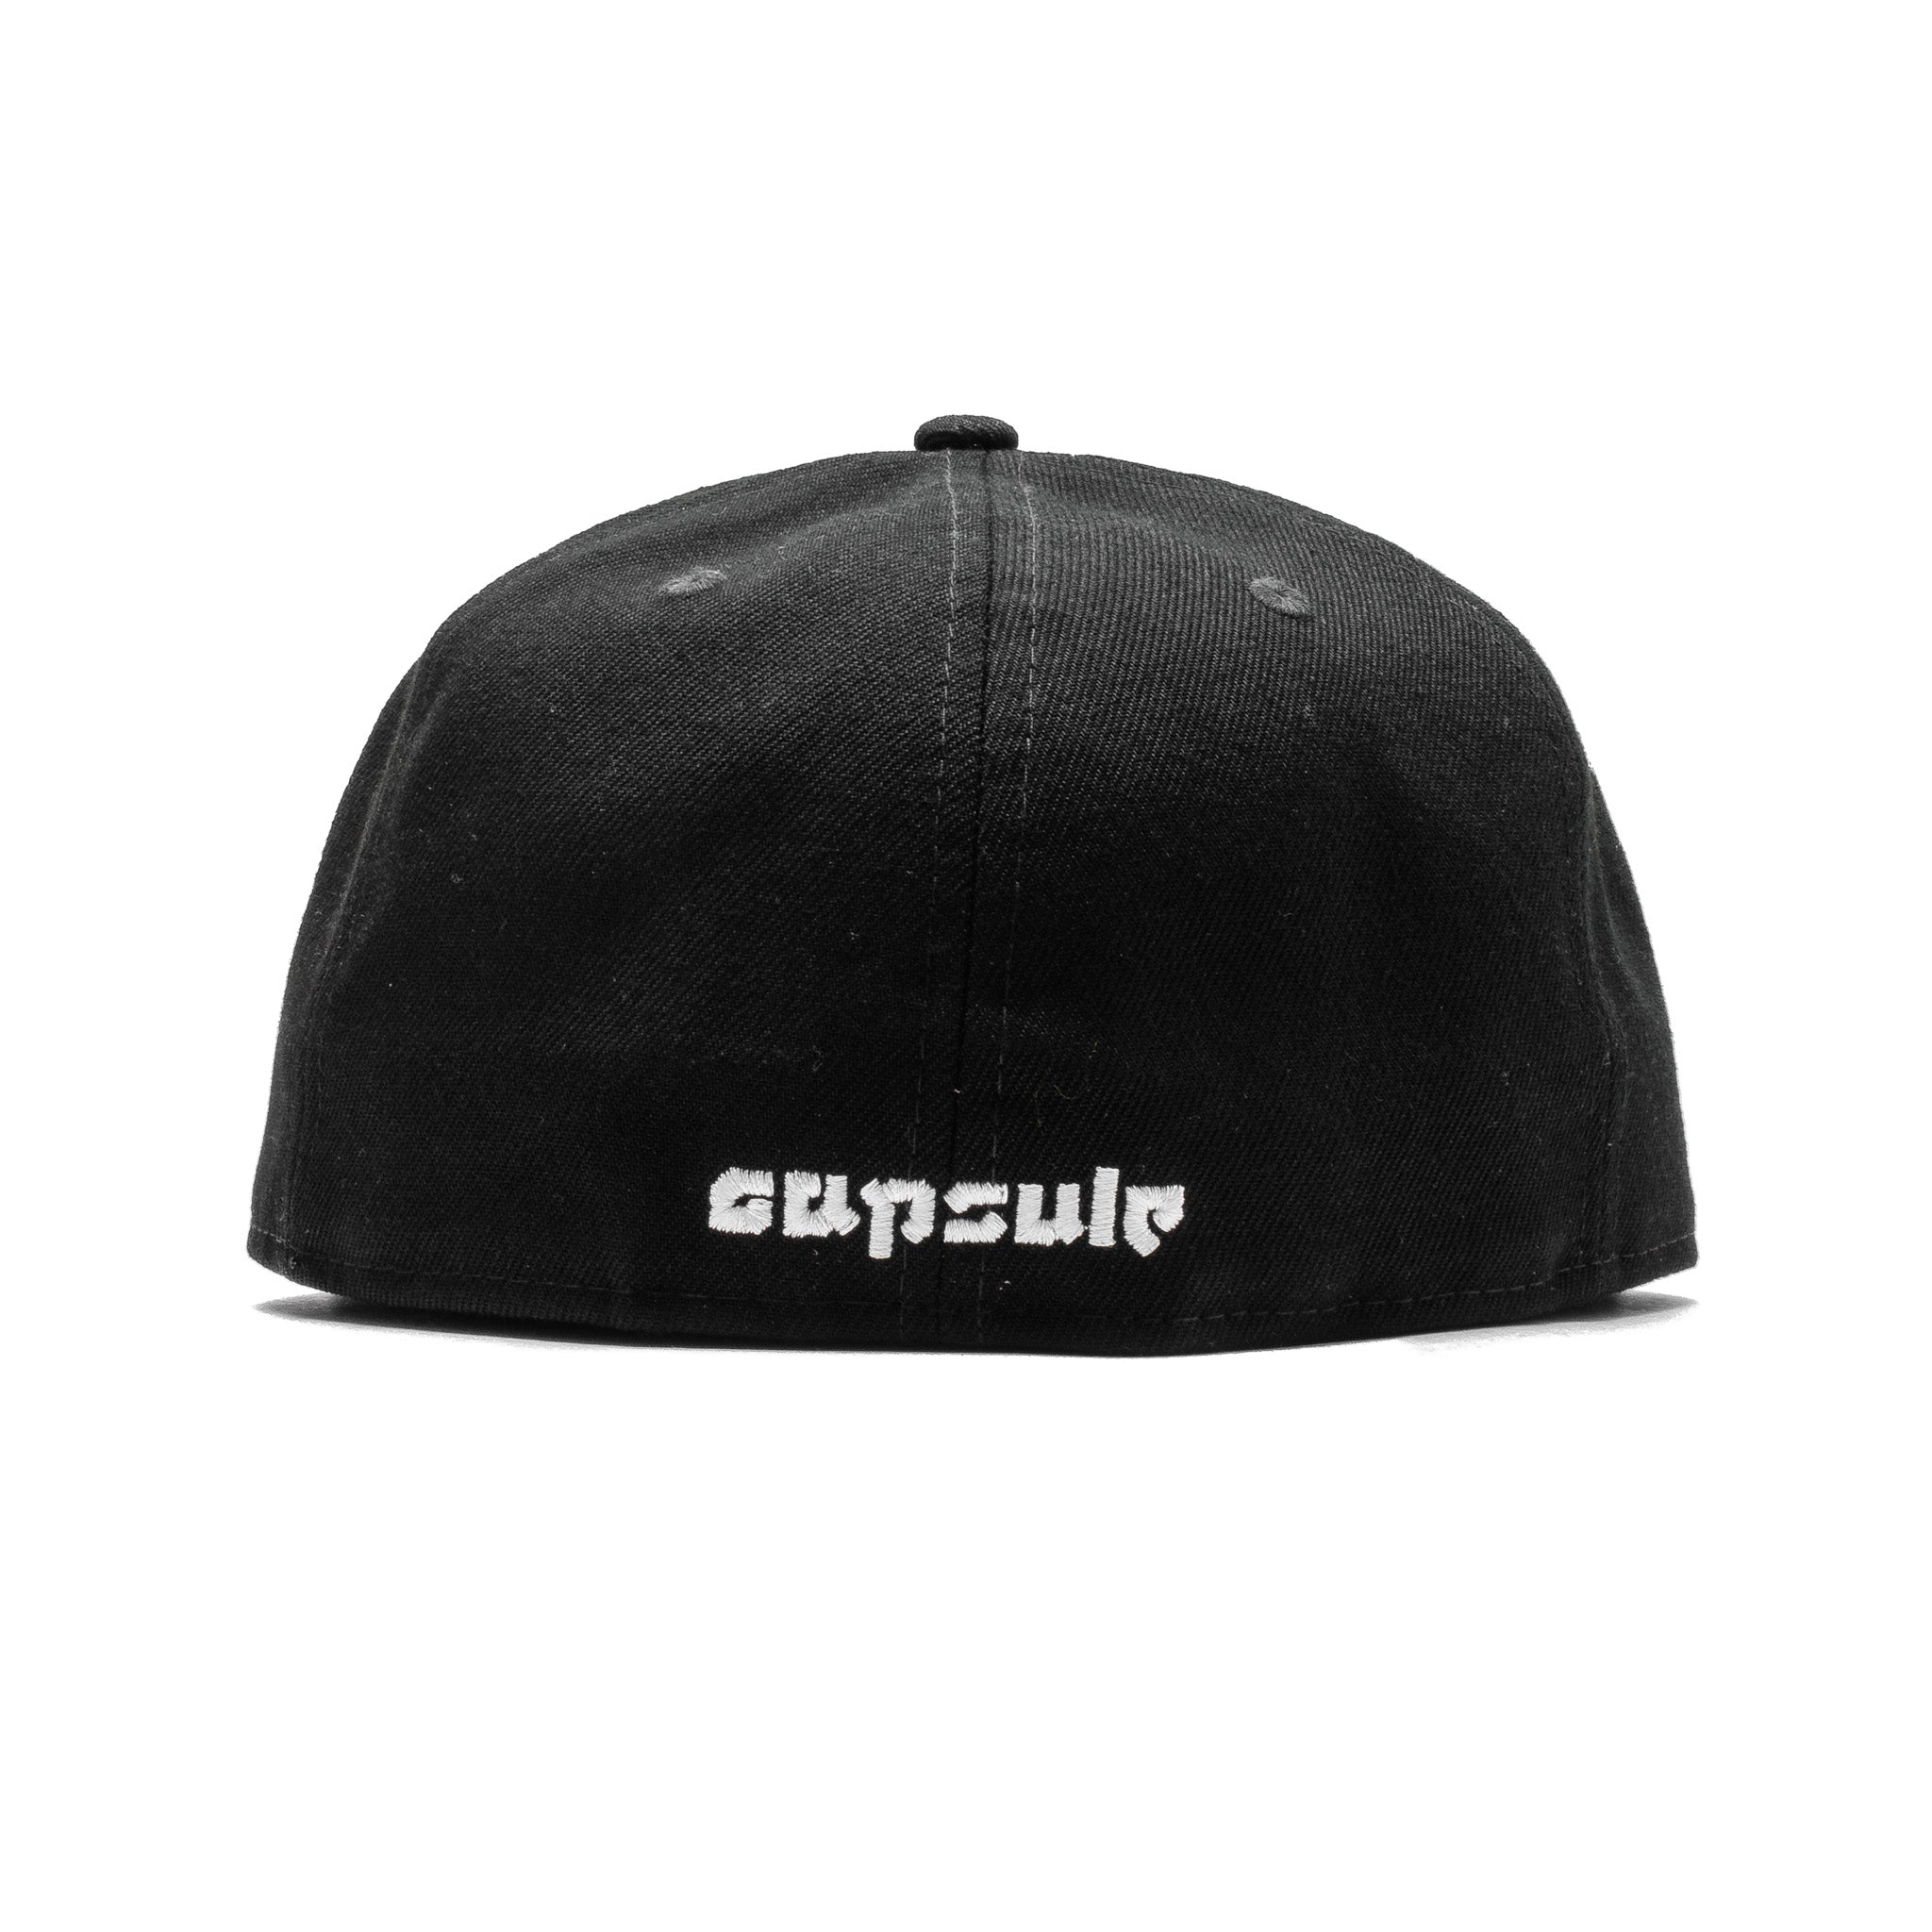 Capsule x New Era OG Logo Cap Black